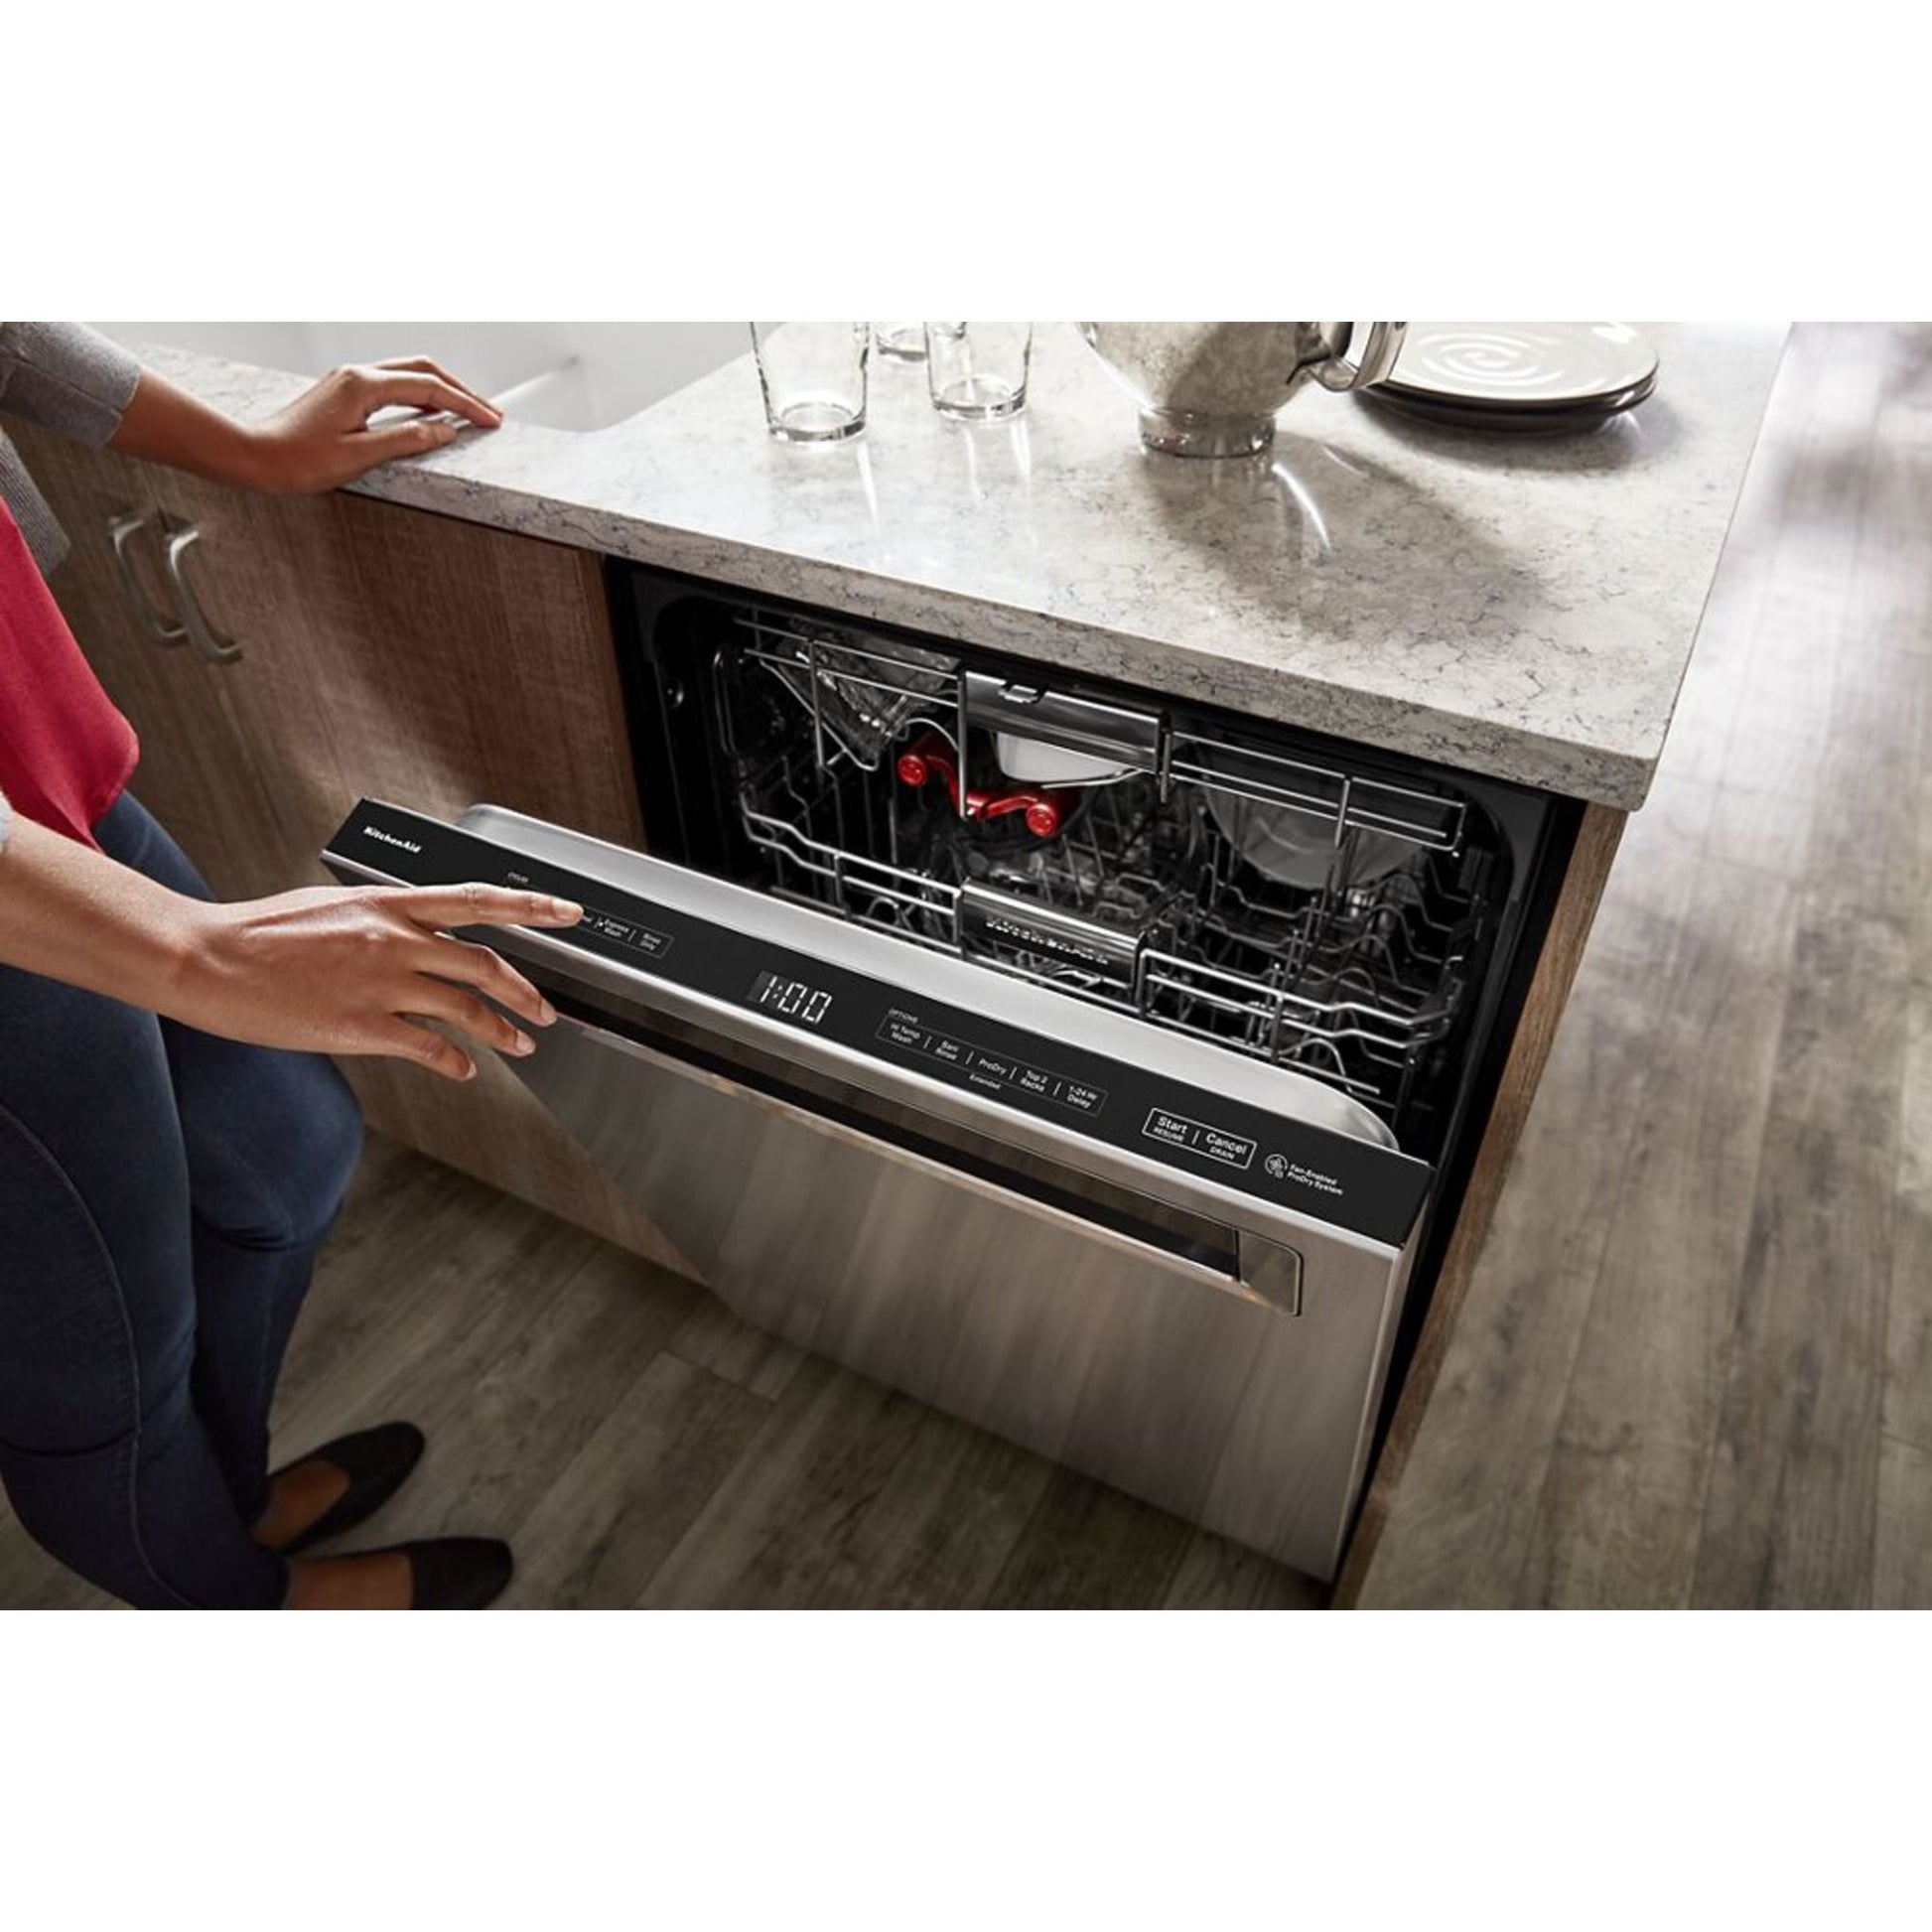 KitchenAid Dishwasher (KDFE104KPS) - Stainless Steel